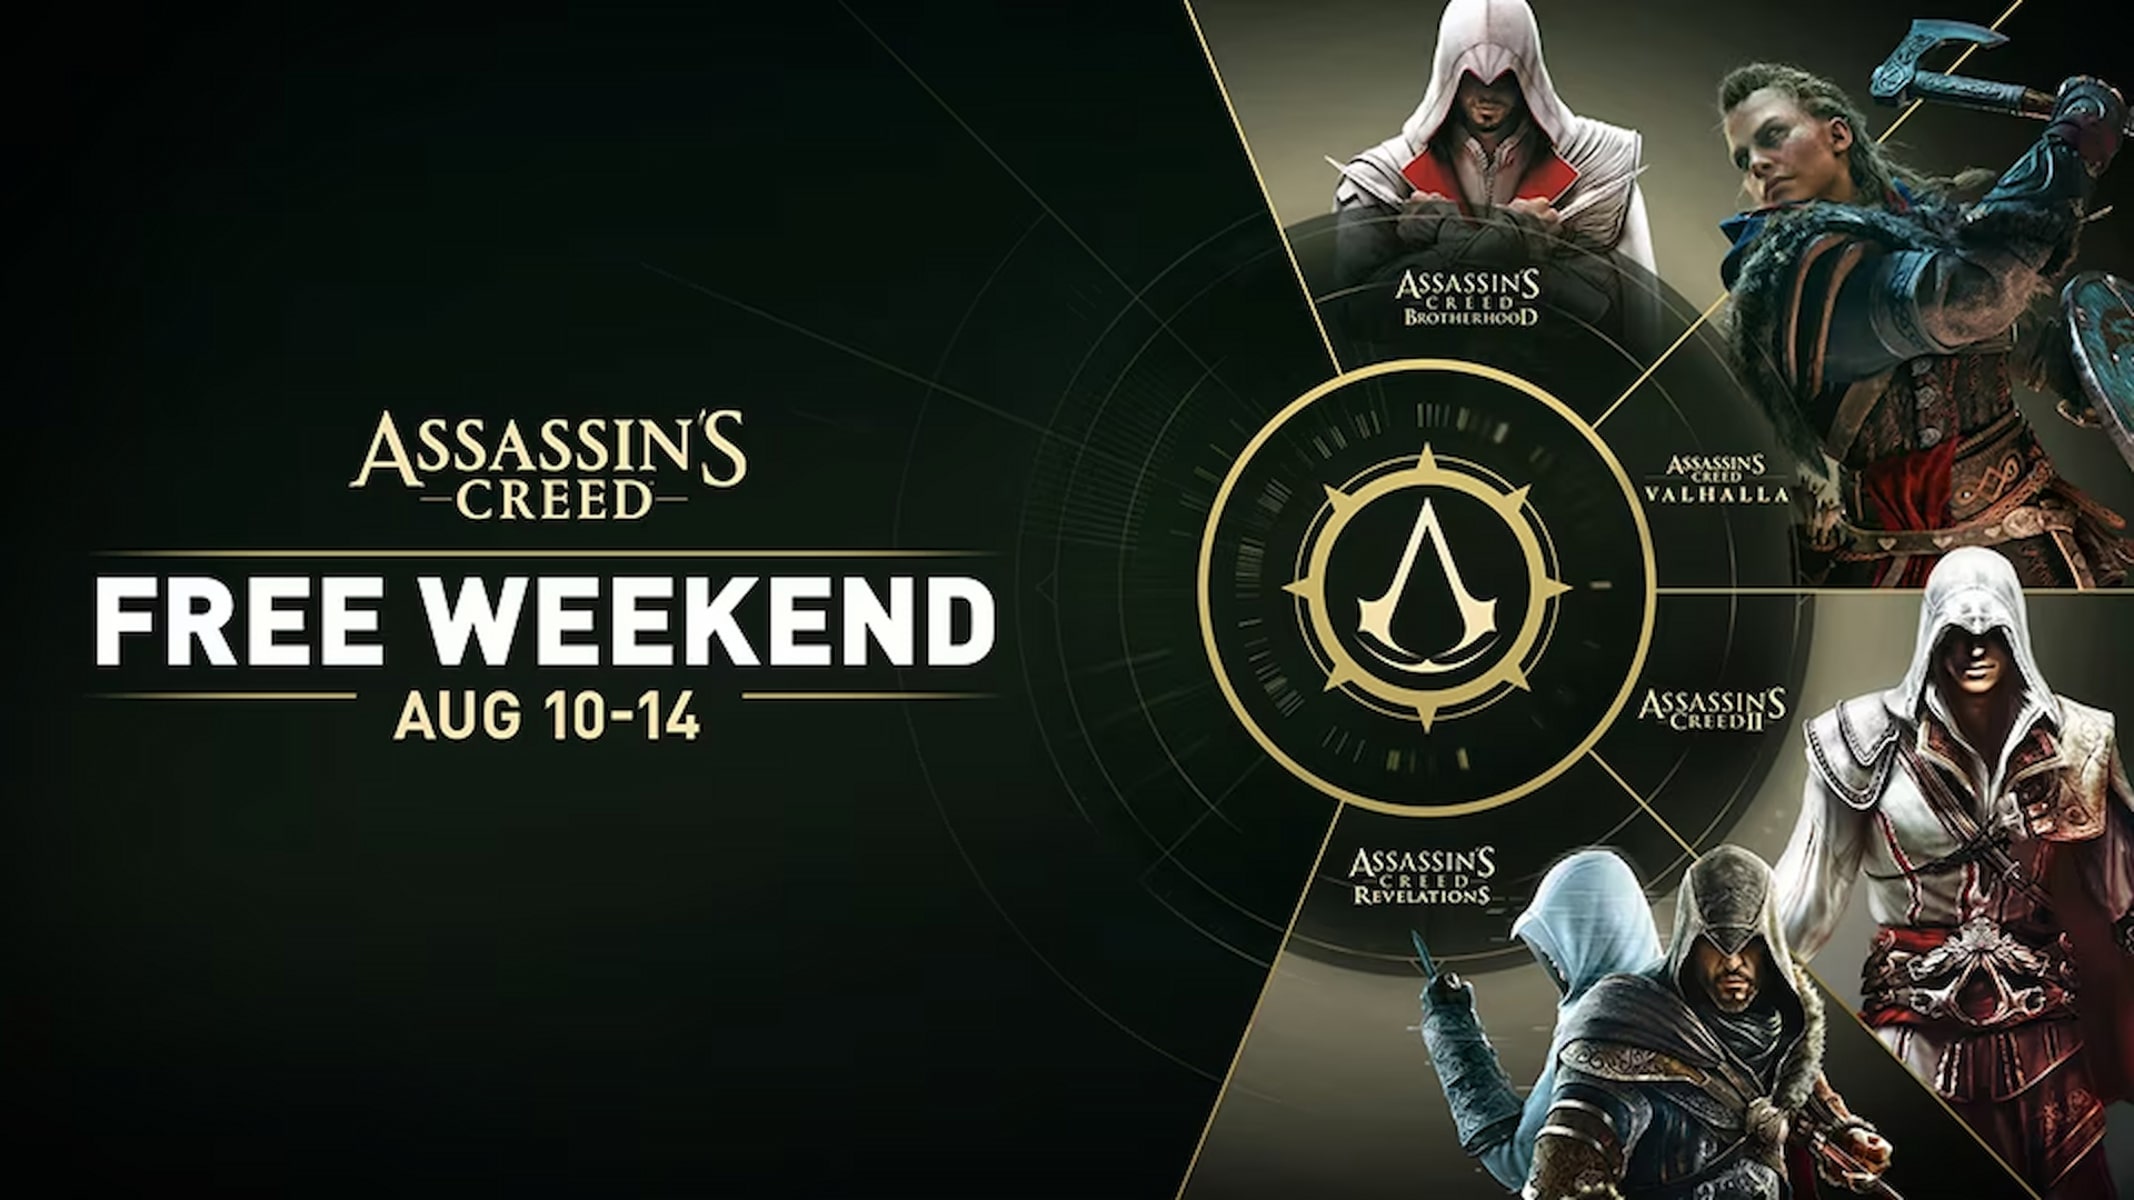 Assassins Creed free weekend1 min